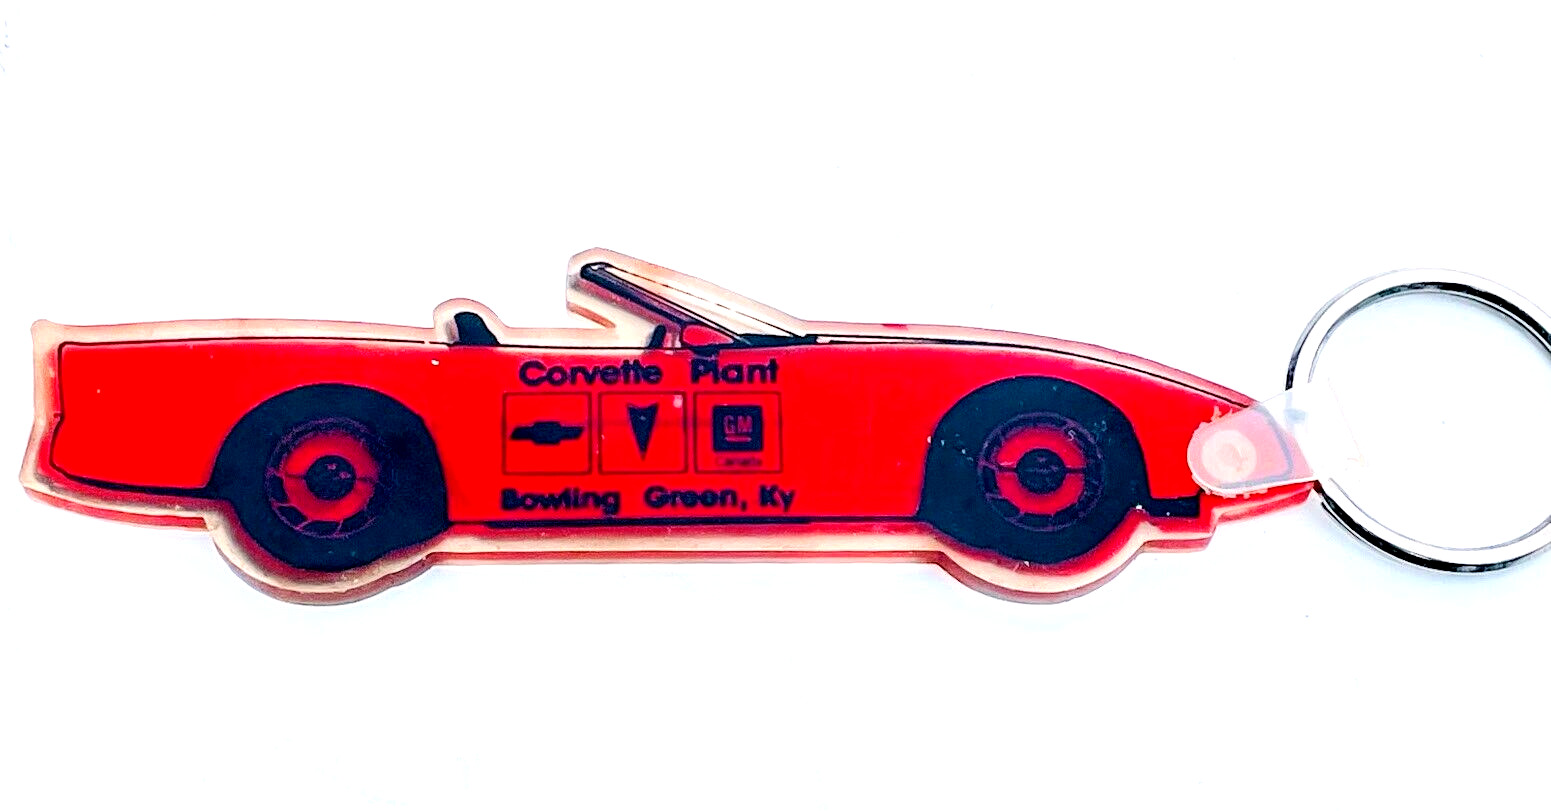 CORVETTE PLANT Bowling Green Kentucky Vintage Rubber Convertible Vette Keychain